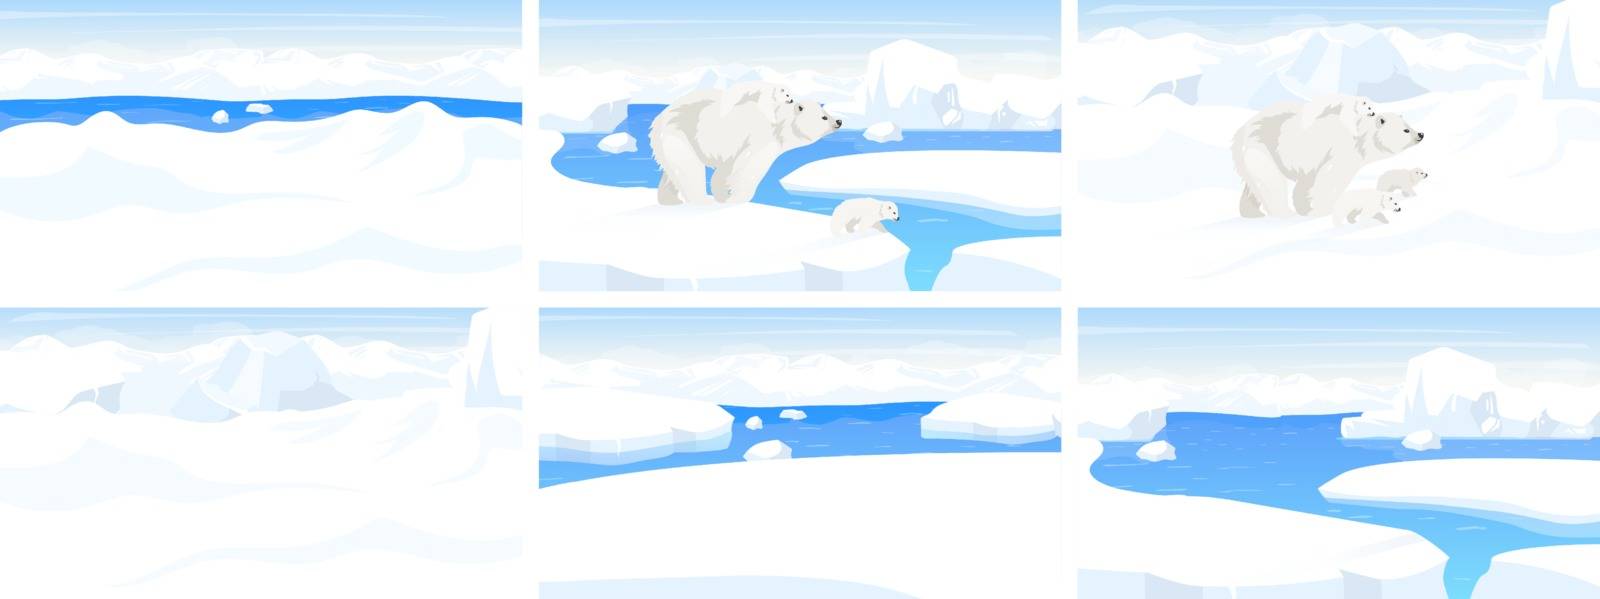 North pole wildlife flat vector illustration. Arctic landscape. Snow panoramic scene. White adult bear walking with cubs on winter hills. Iceberg edges. Marine mammal cartoon wallpaper